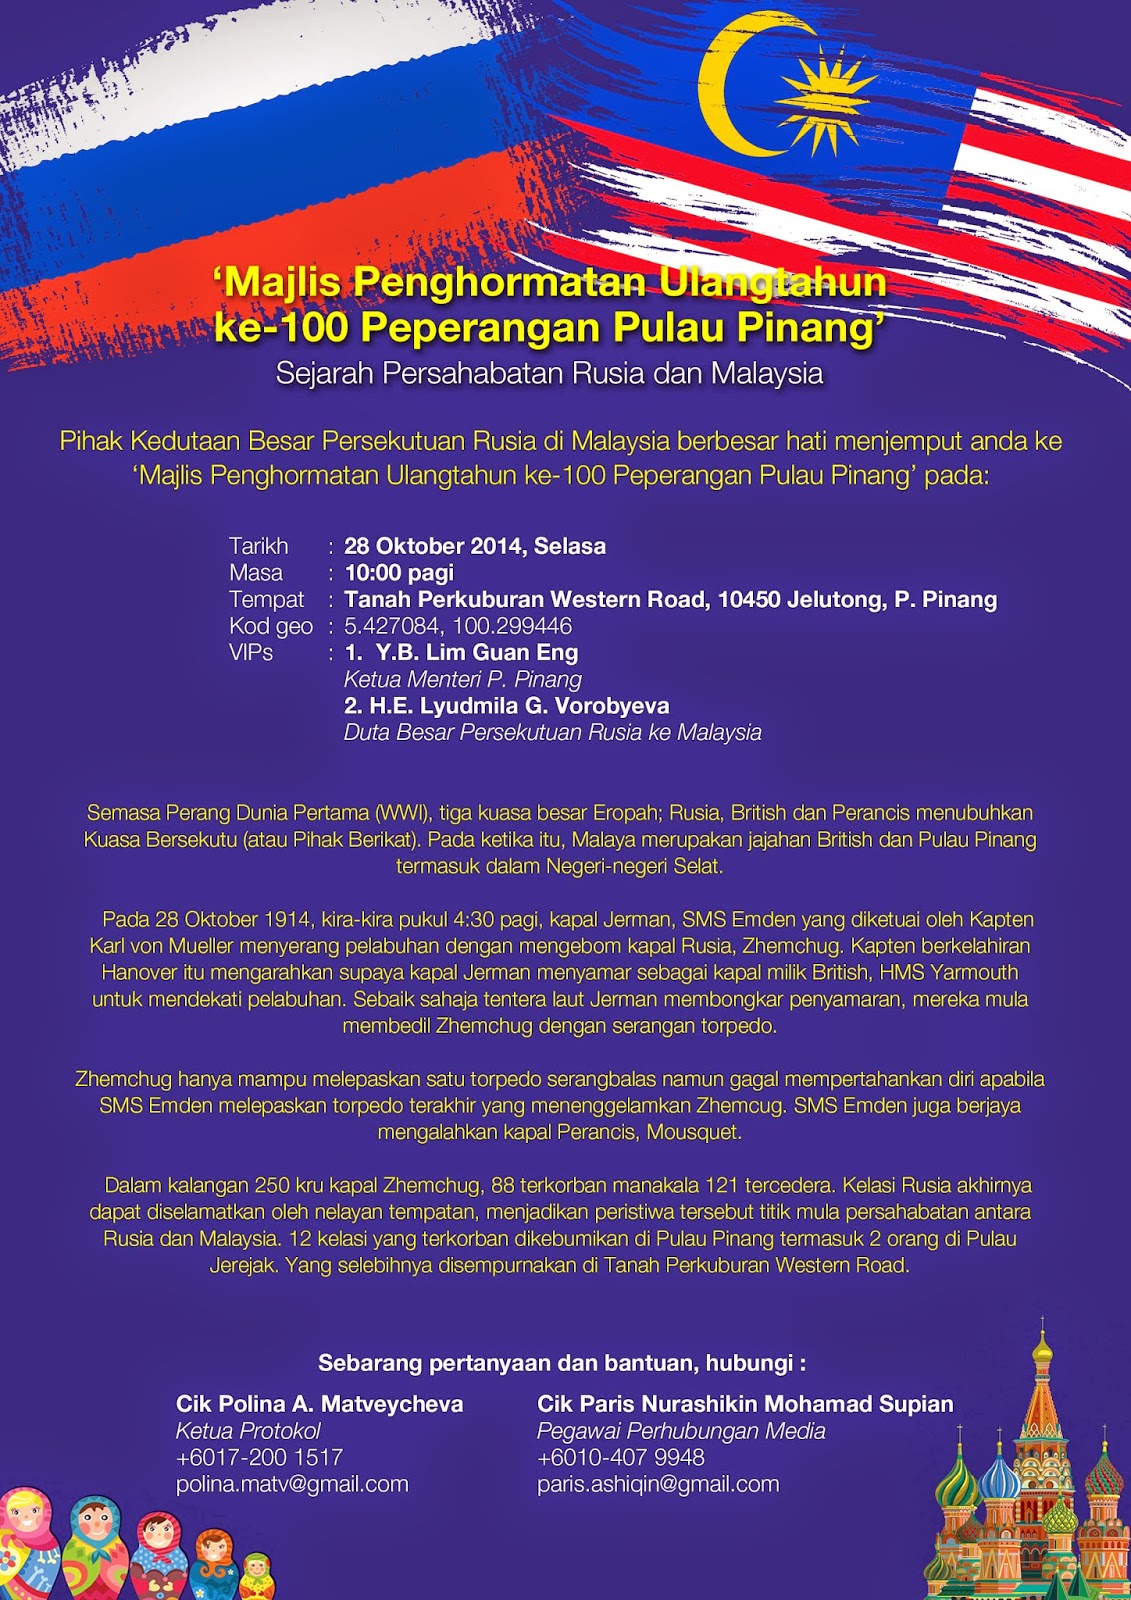 The Battle of Penang 1914 | Majlis Penghormatan Ulangtahun ke-100 Peperangan Pulau Pinang